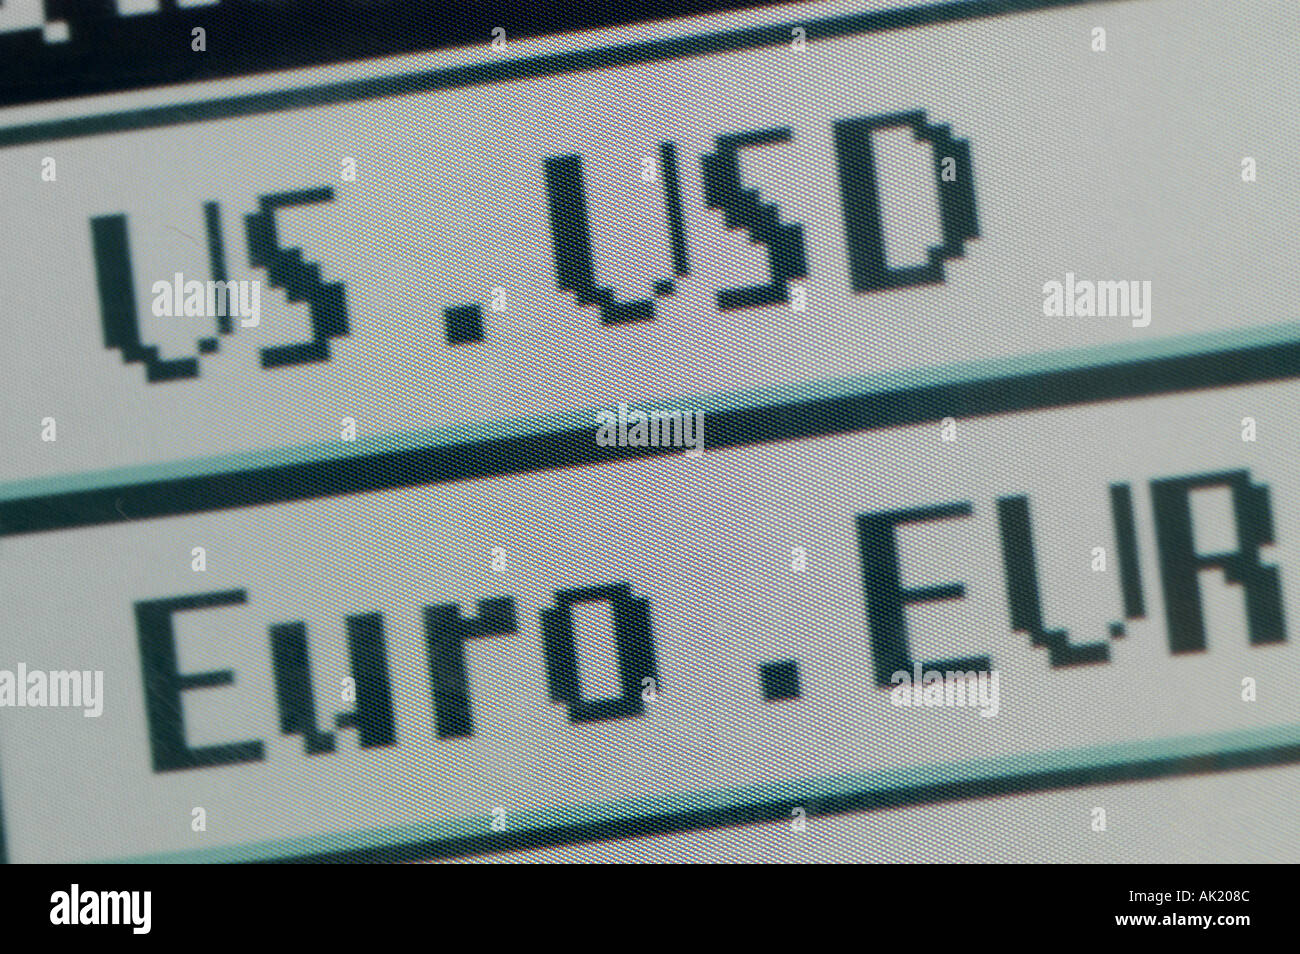 EUR USD Currency exchange convert converter value online Euro Dollar  horizontal Stock Photo - Alamy